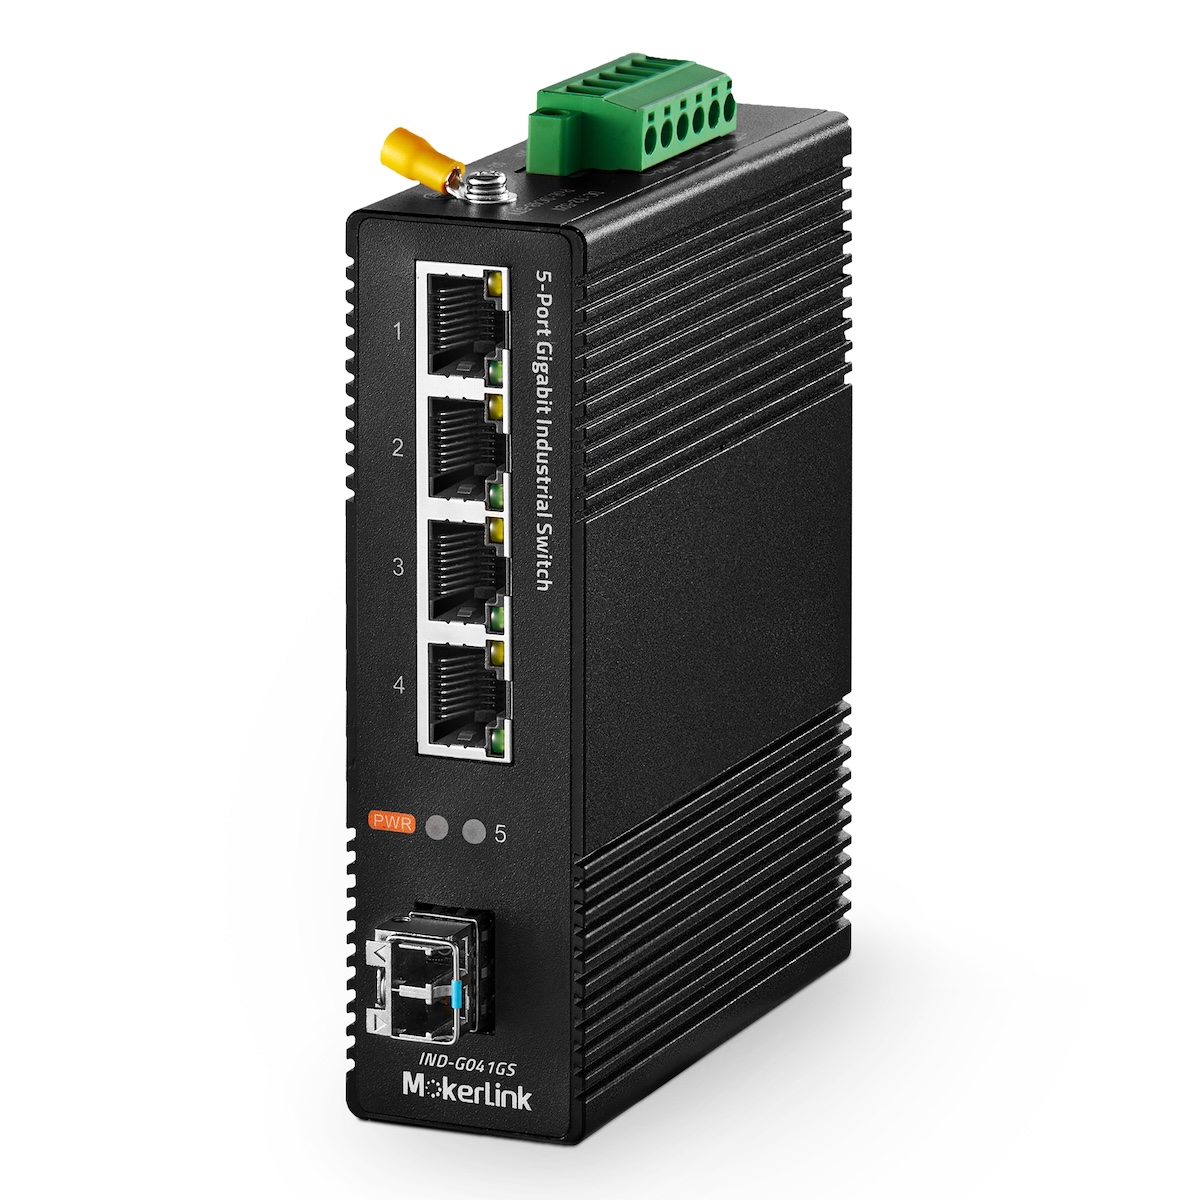 MokerLink 5 Port Gigabit Industrial DIN-Rail Ethernet Switch with 1